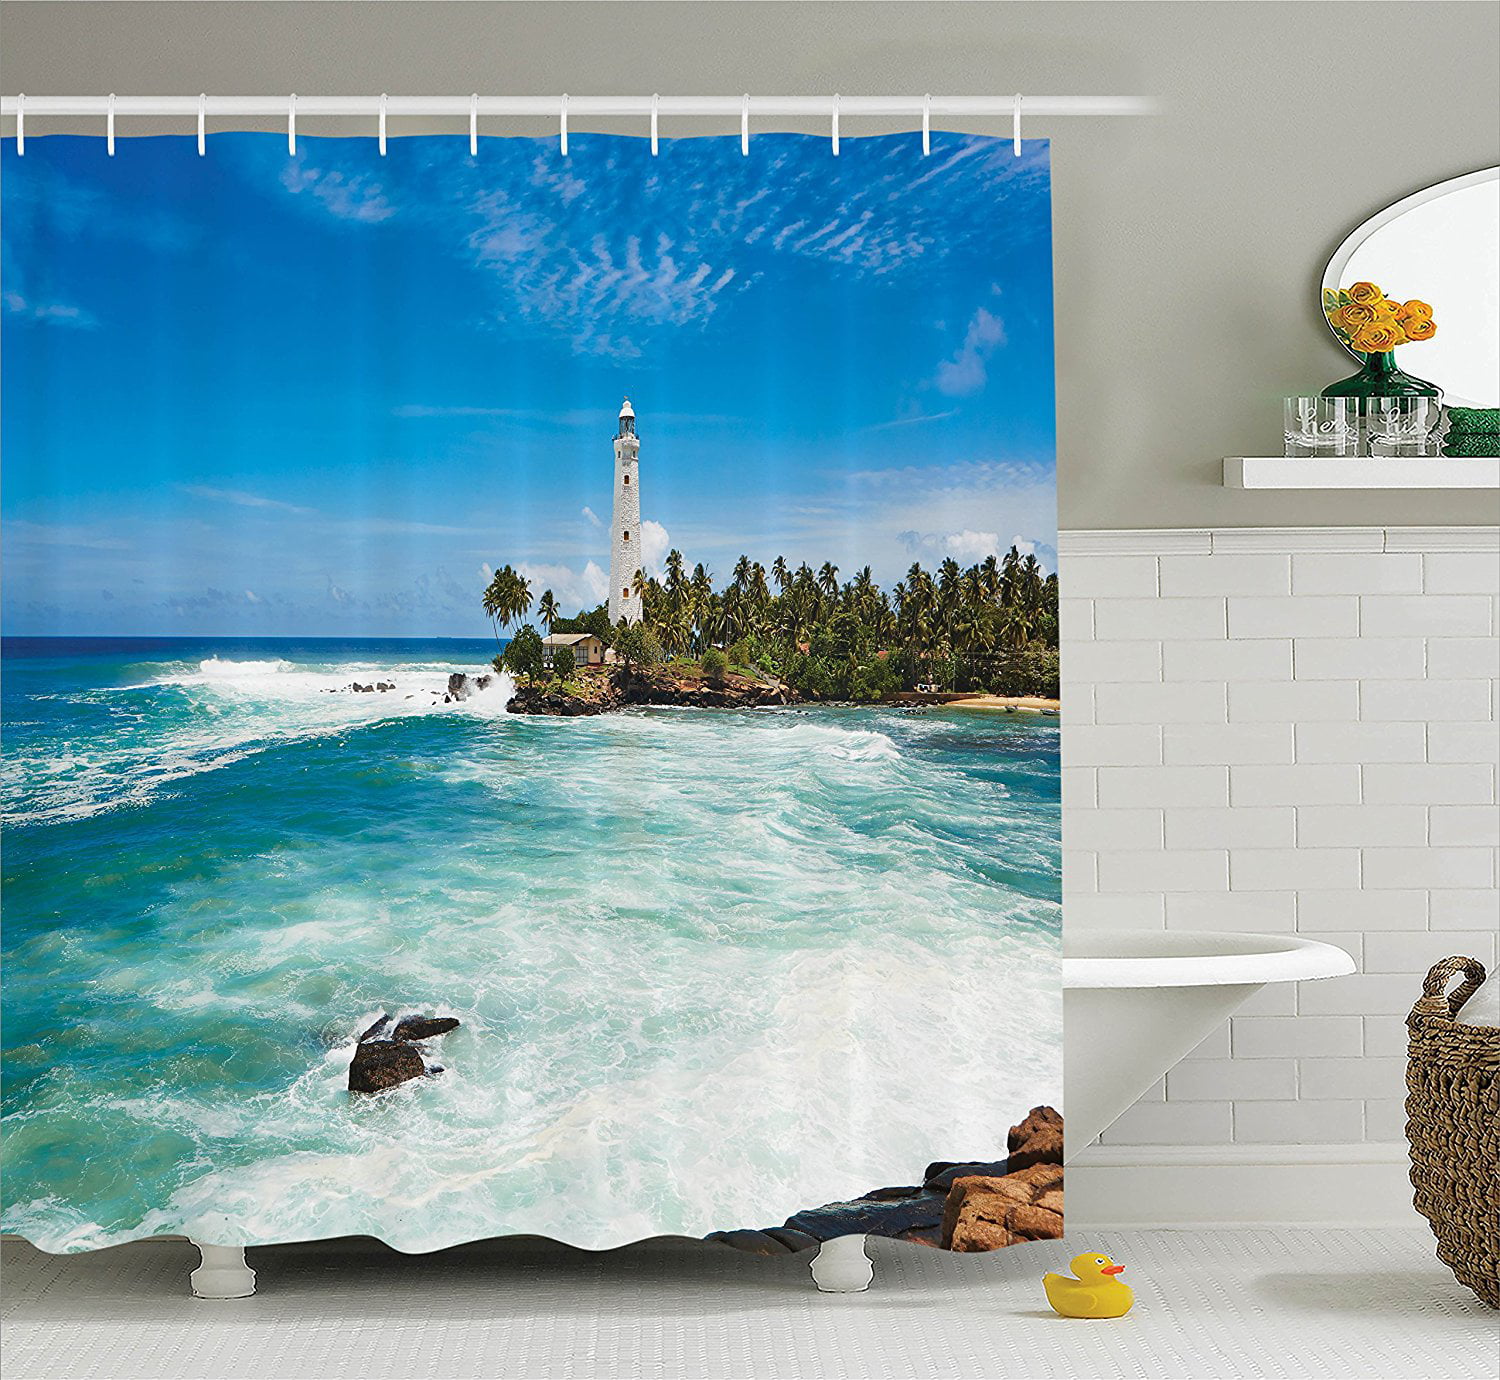 Lighthouse Decor Shower Curtain Tropical Island Bathroom Accessories Home Decor 